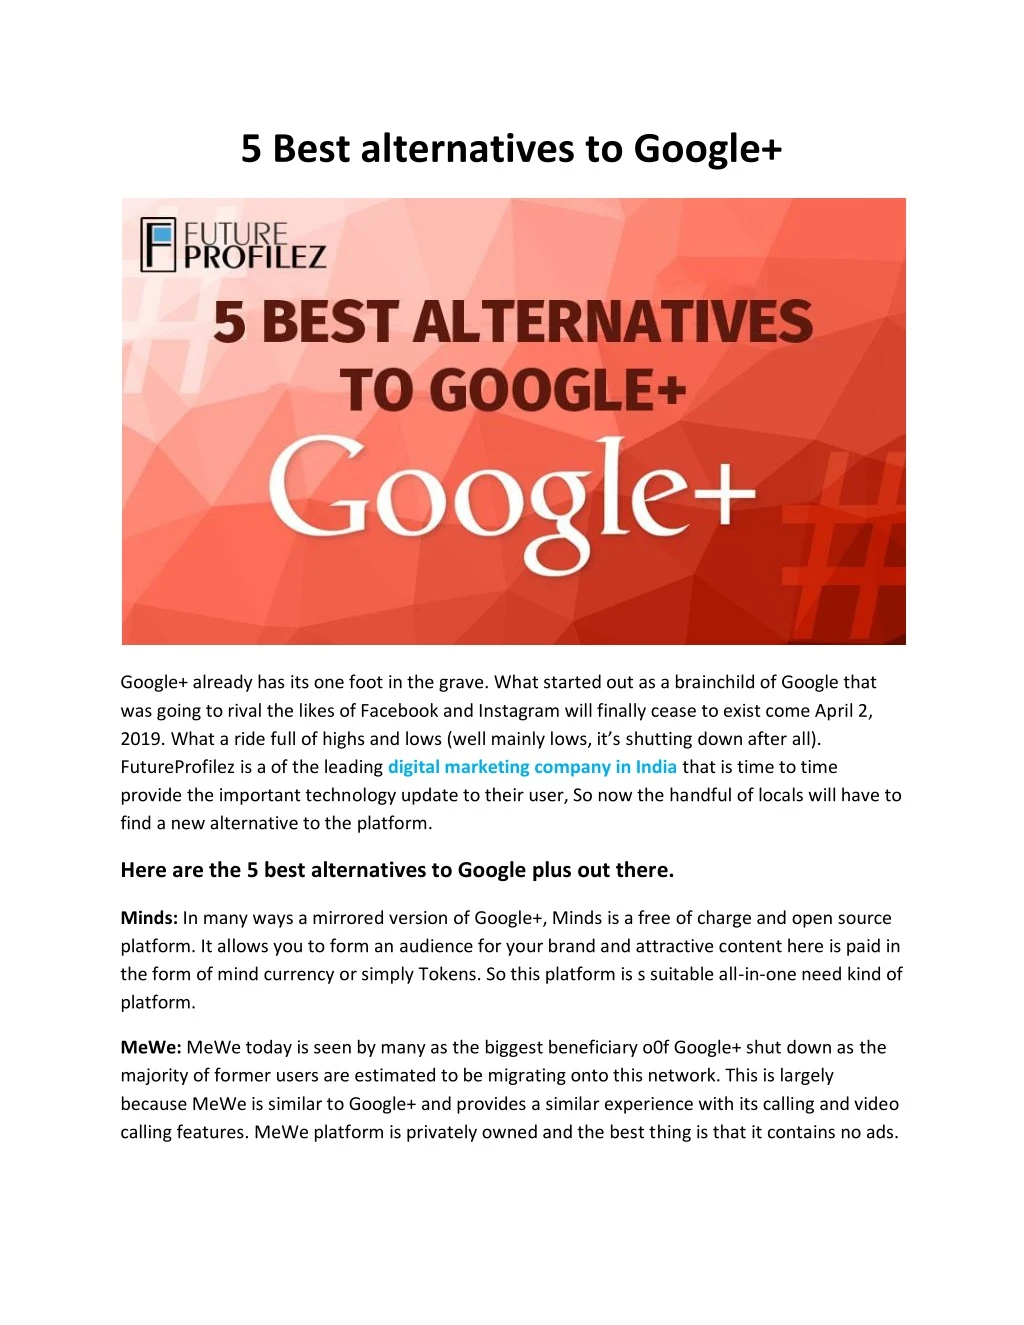 5 best alternatives to google